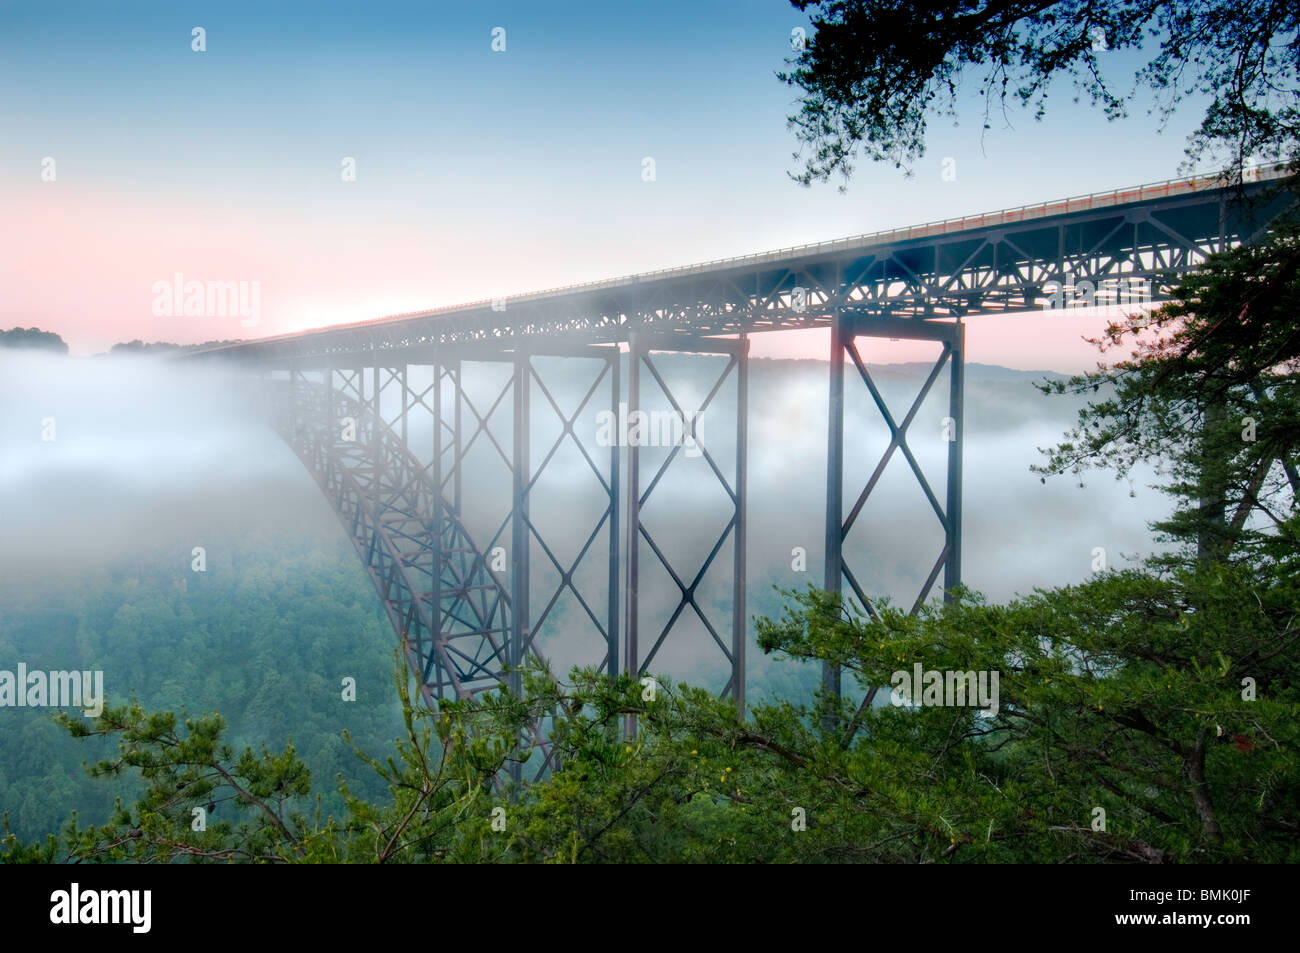 New River Gorge Bridge Stockfoto